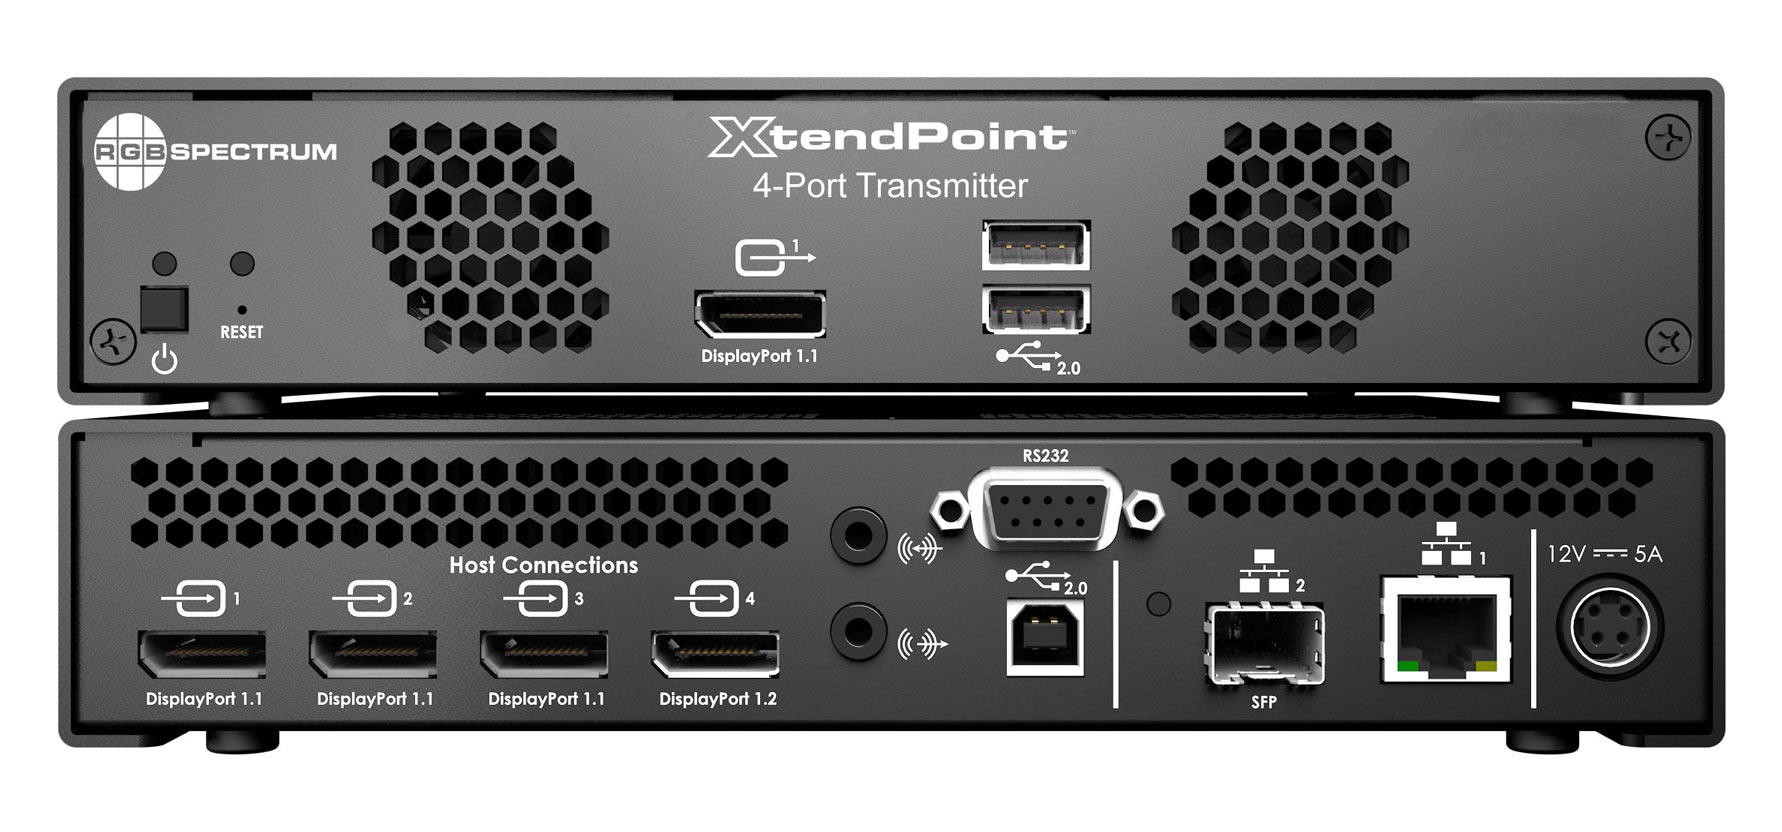 XtendPoint 4-Port Transmitter